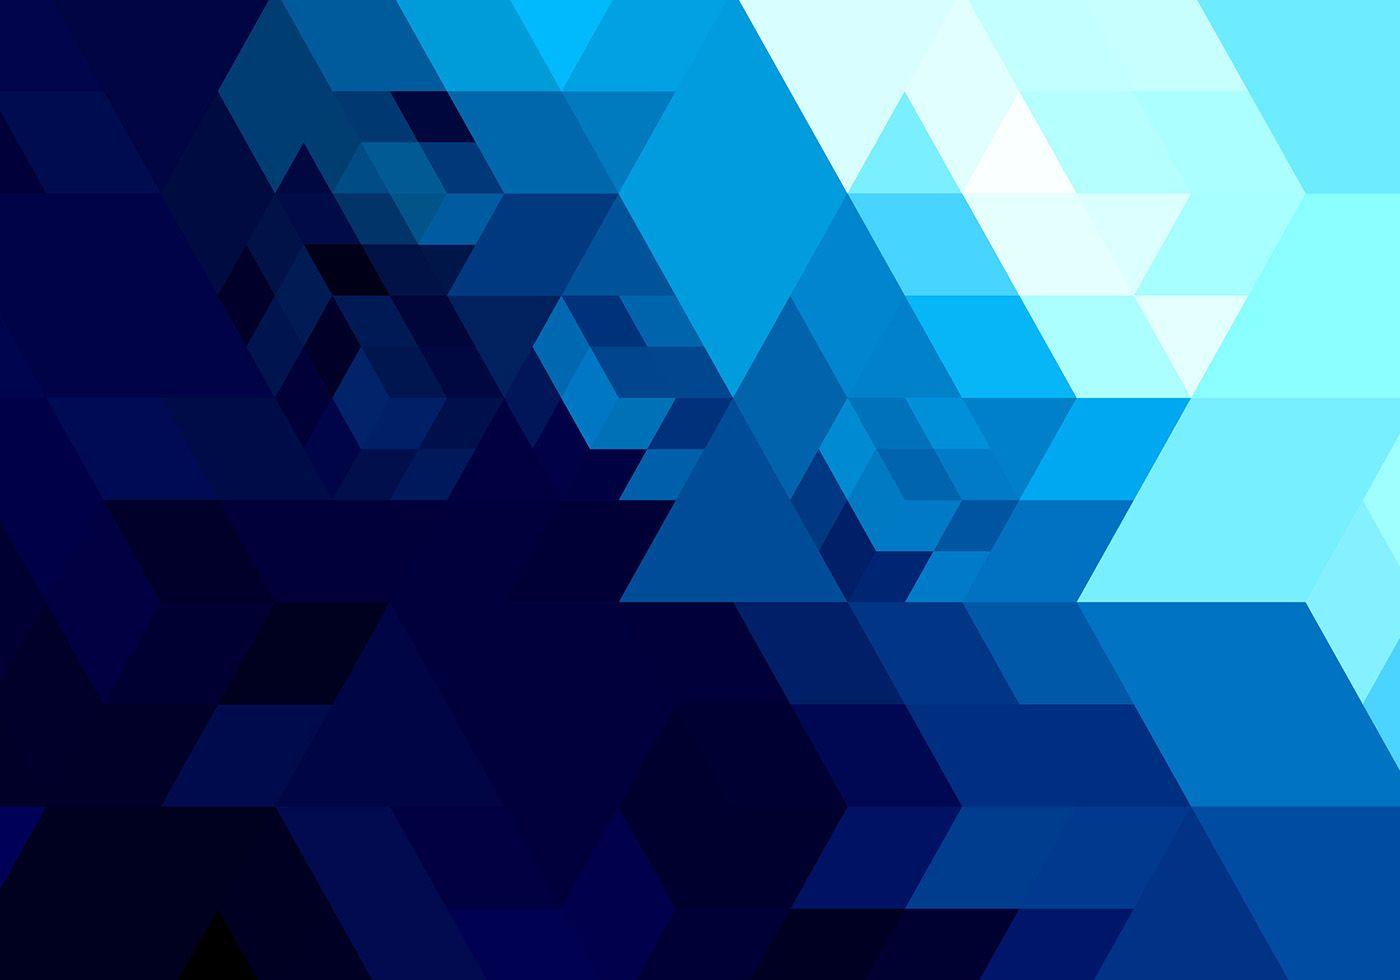 Abstract bright blue geometric shape Free Vector Art